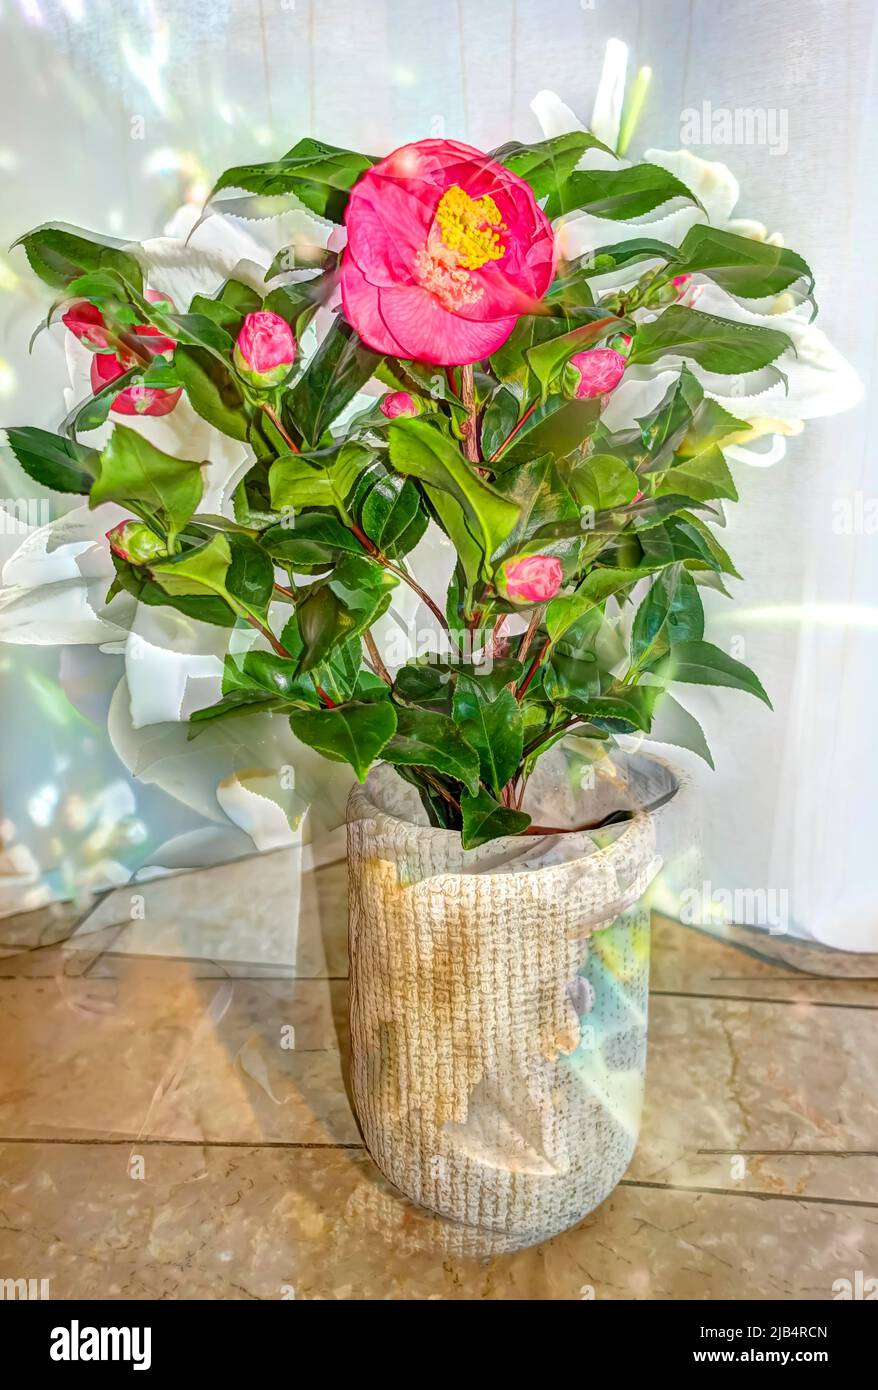 Flowers creative, artistic shot, camellias (Camellia) camellias, red flowers alienated, plants, fragrant, planter, plant pot, Germany Stock Photo